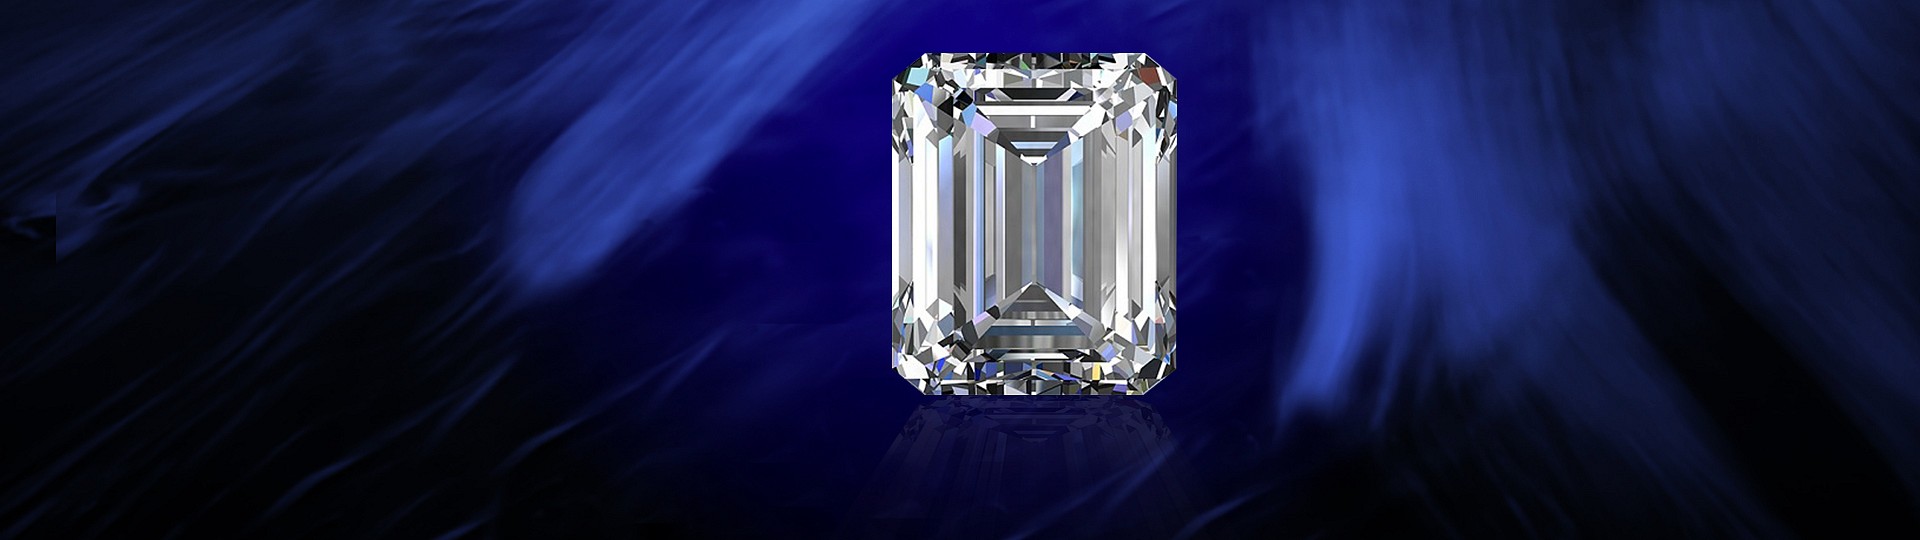 Be Natural, Buy Natural 100% GIA Diamonds by Bid Global International Auctioneers LLC